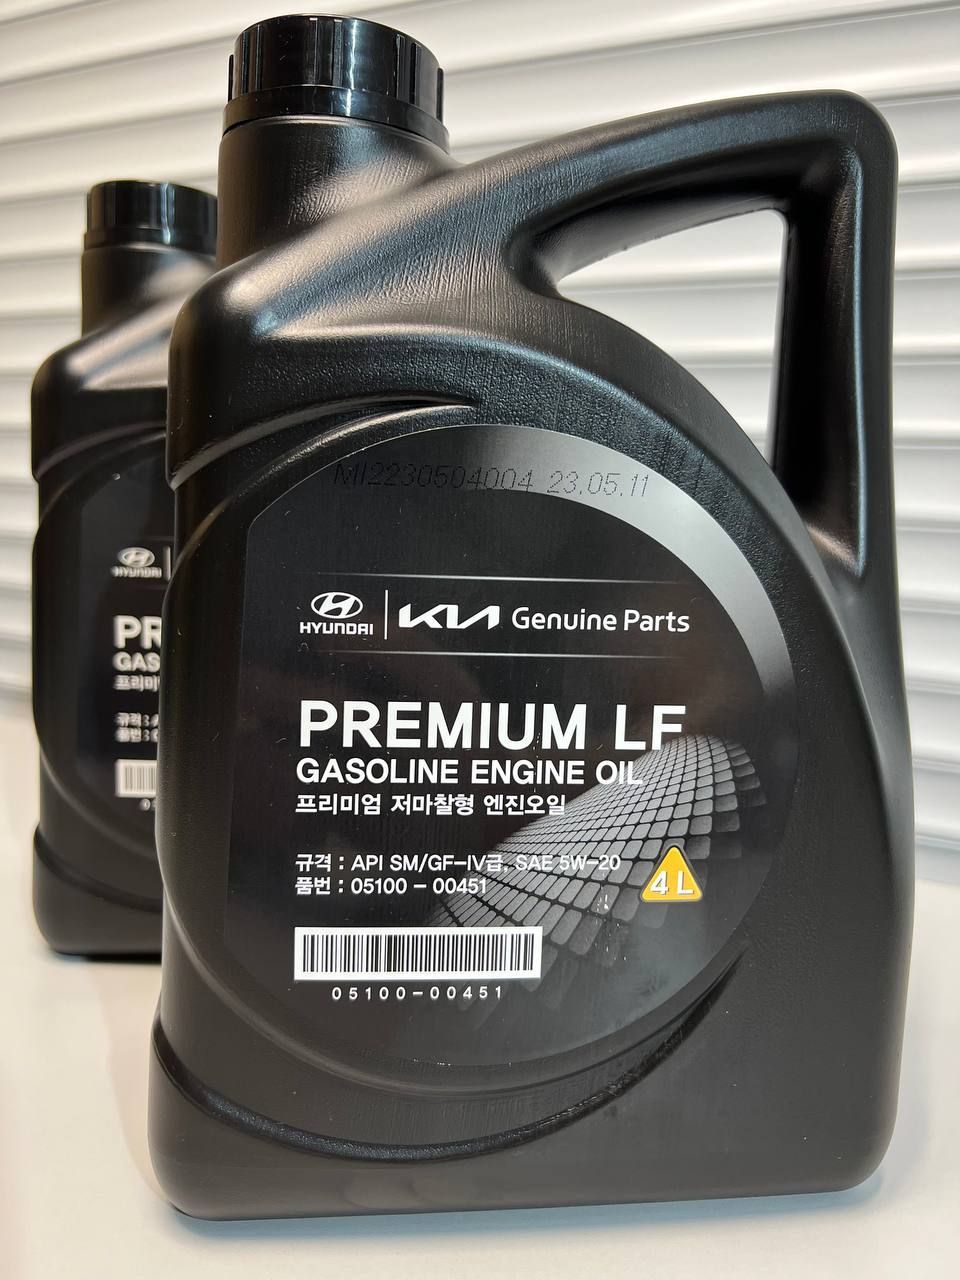 Hyundai premium lf gasoline 5w 20